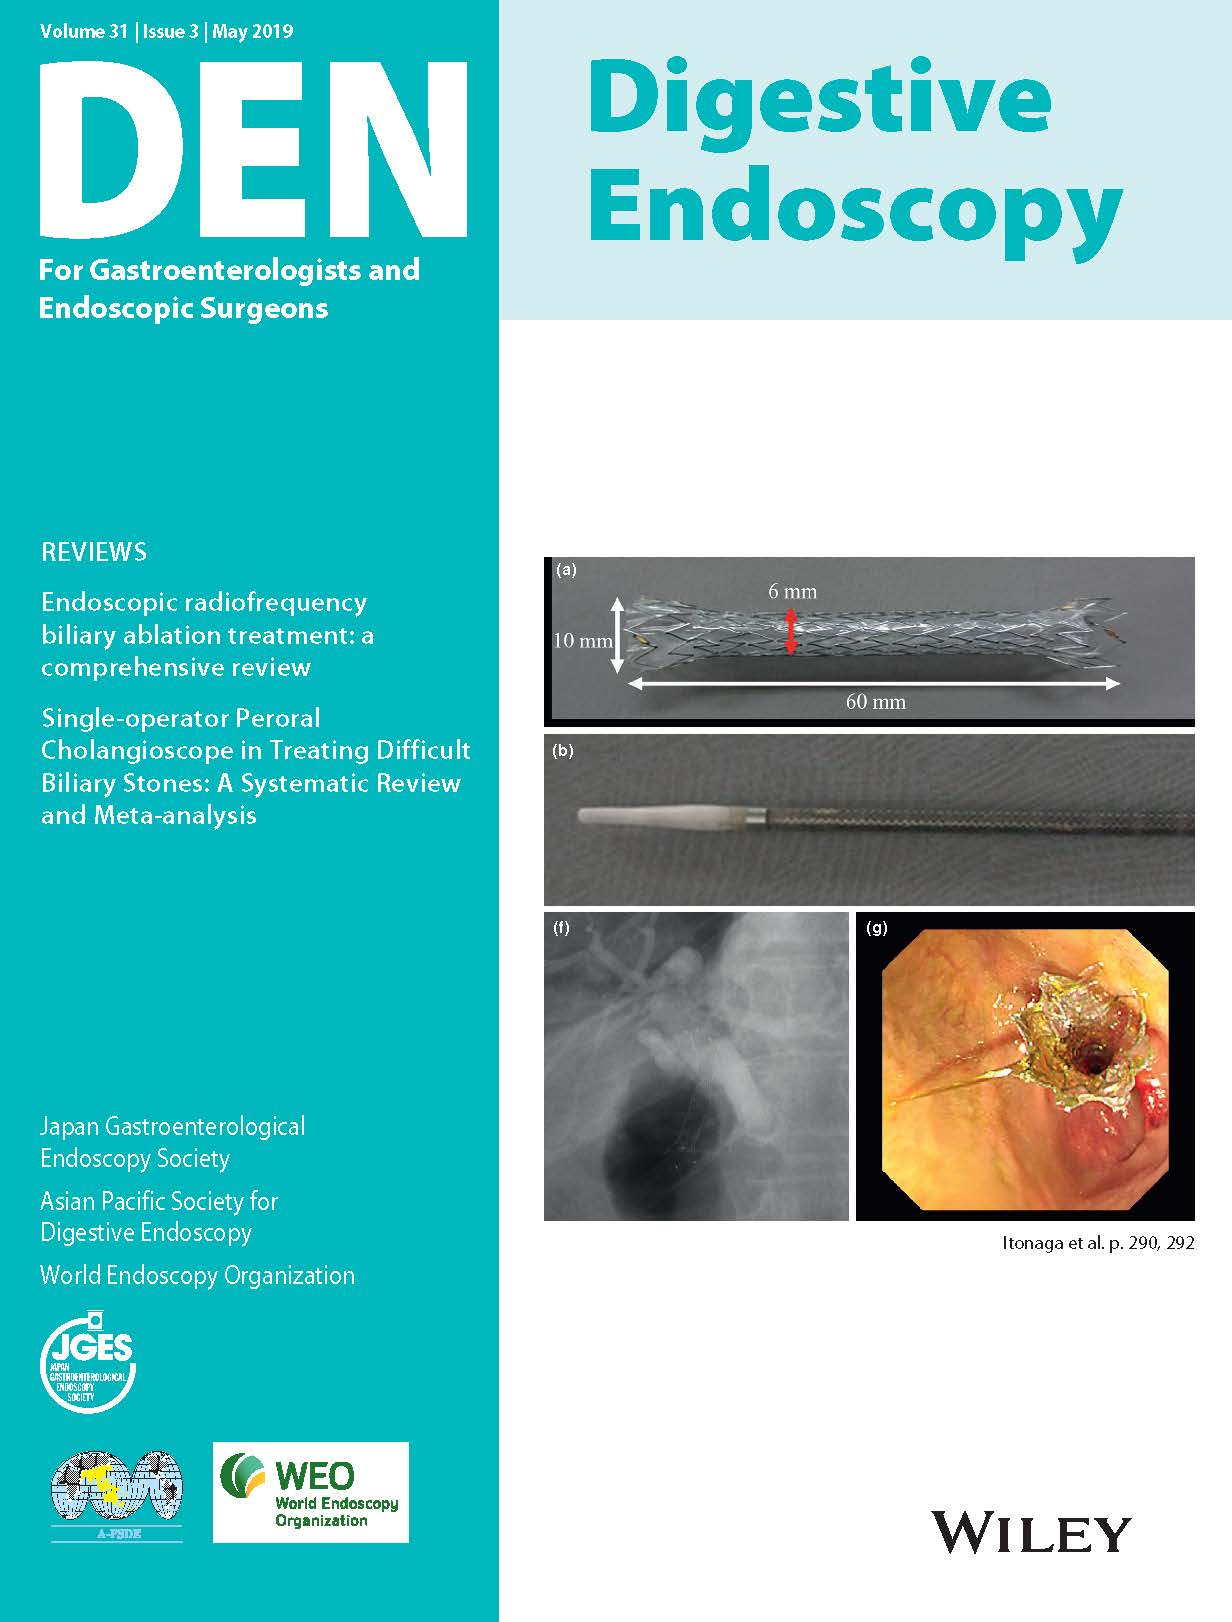 Digestive Endoscopy Vol31-3